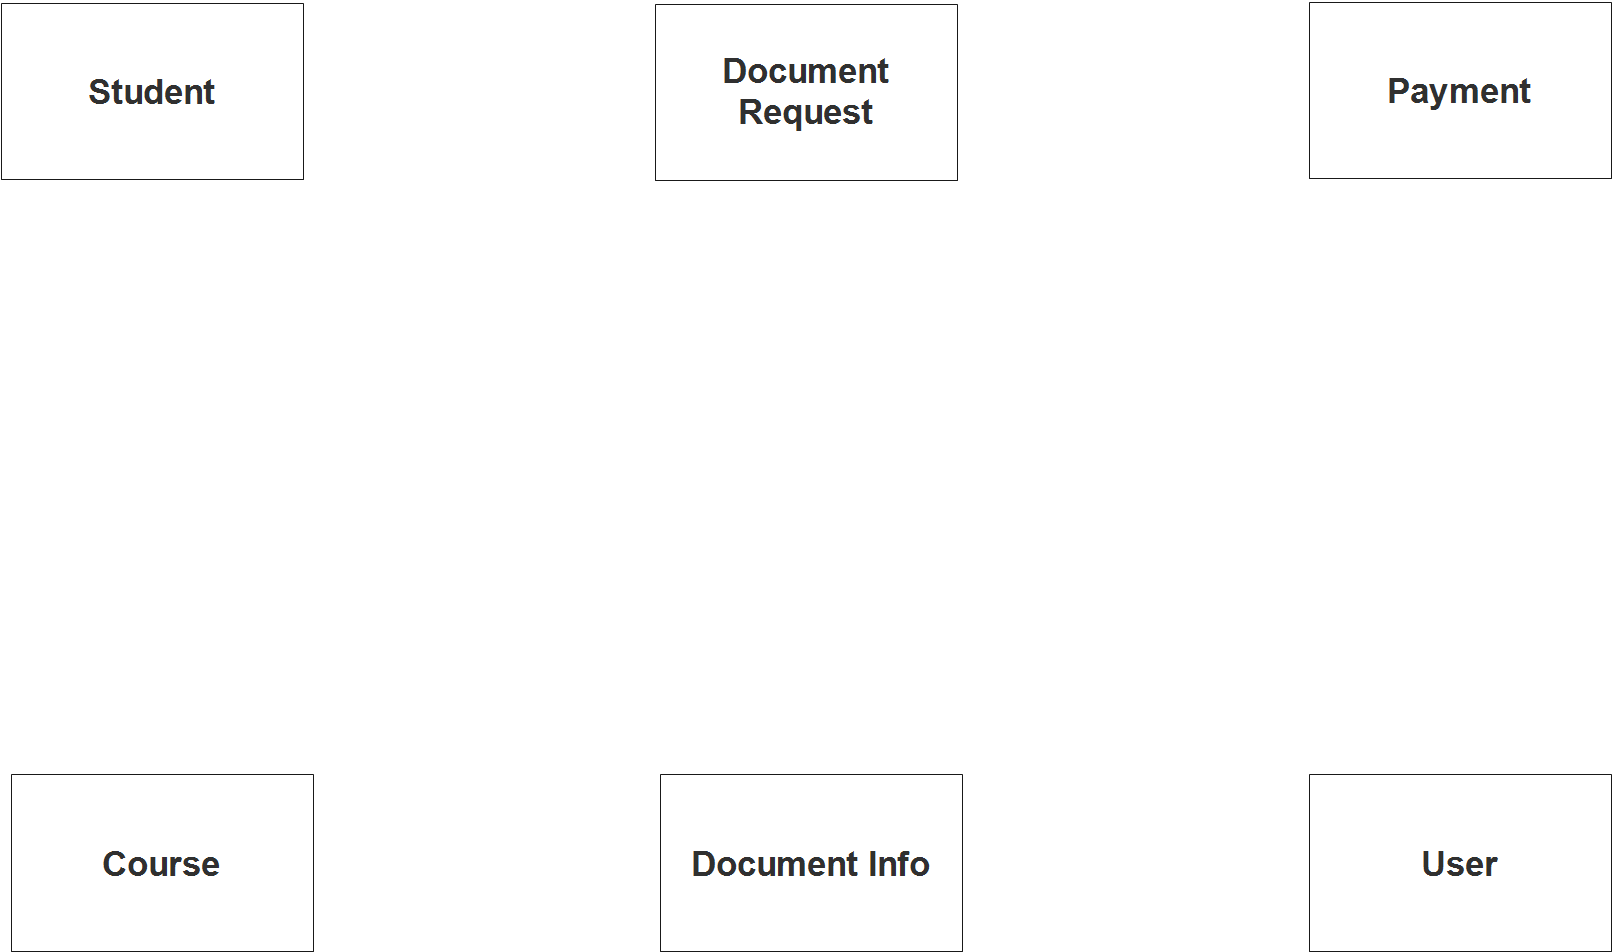 Online School Documents Processing System ER Diagram - Step 1 Identify Entities